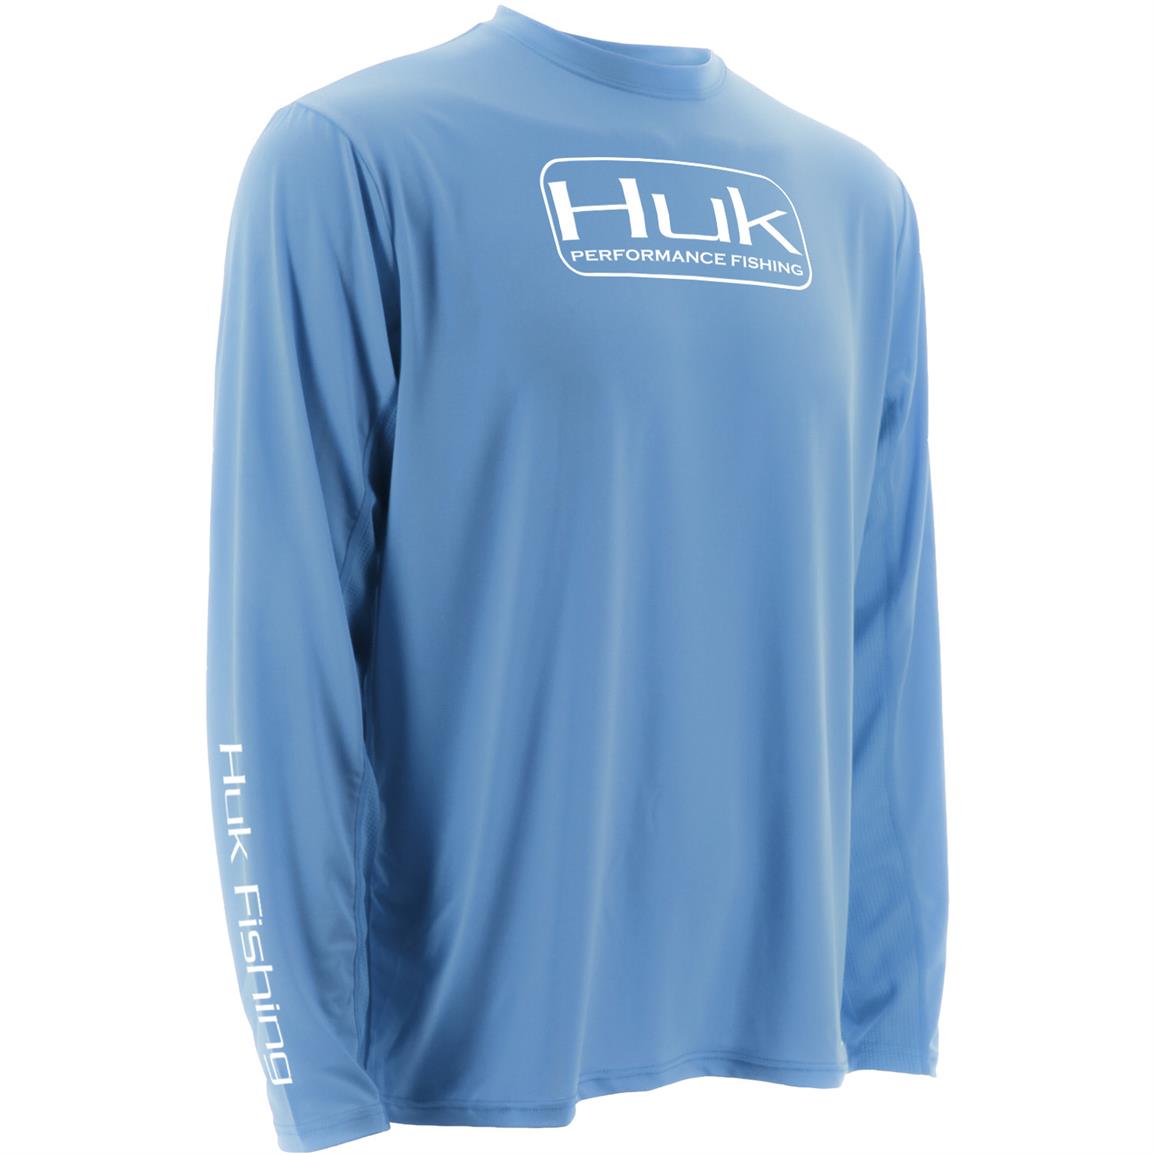 Huk Performance ICON Long-sleeved Shirt - 625816, Shirts at Sportsman's ...